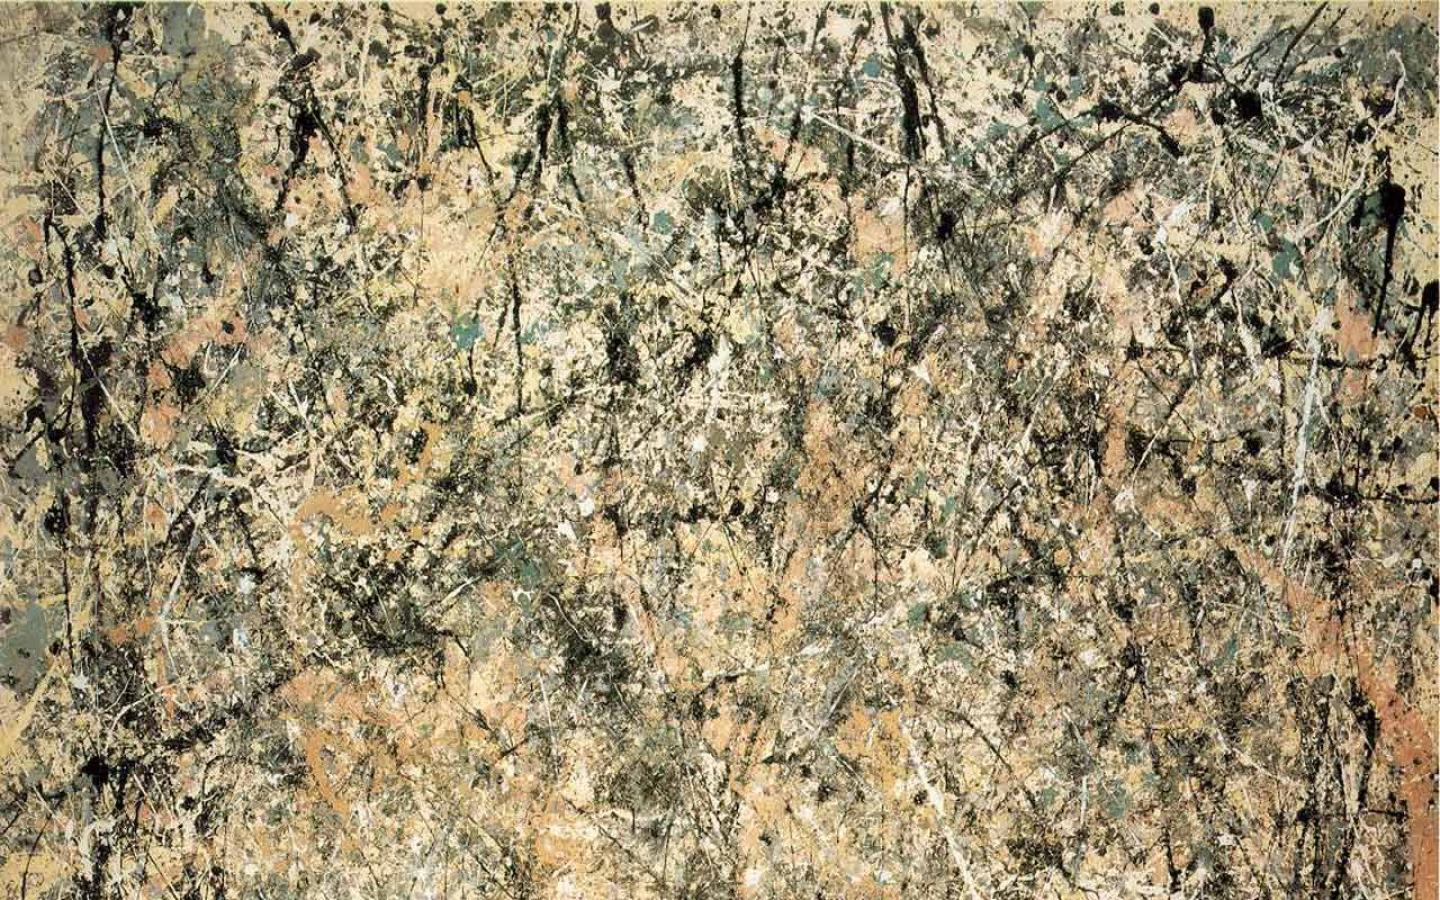 Jackson Pollock - Number 1 - Lavender Mist (1950) Wallpaper #4 1440 x 900 